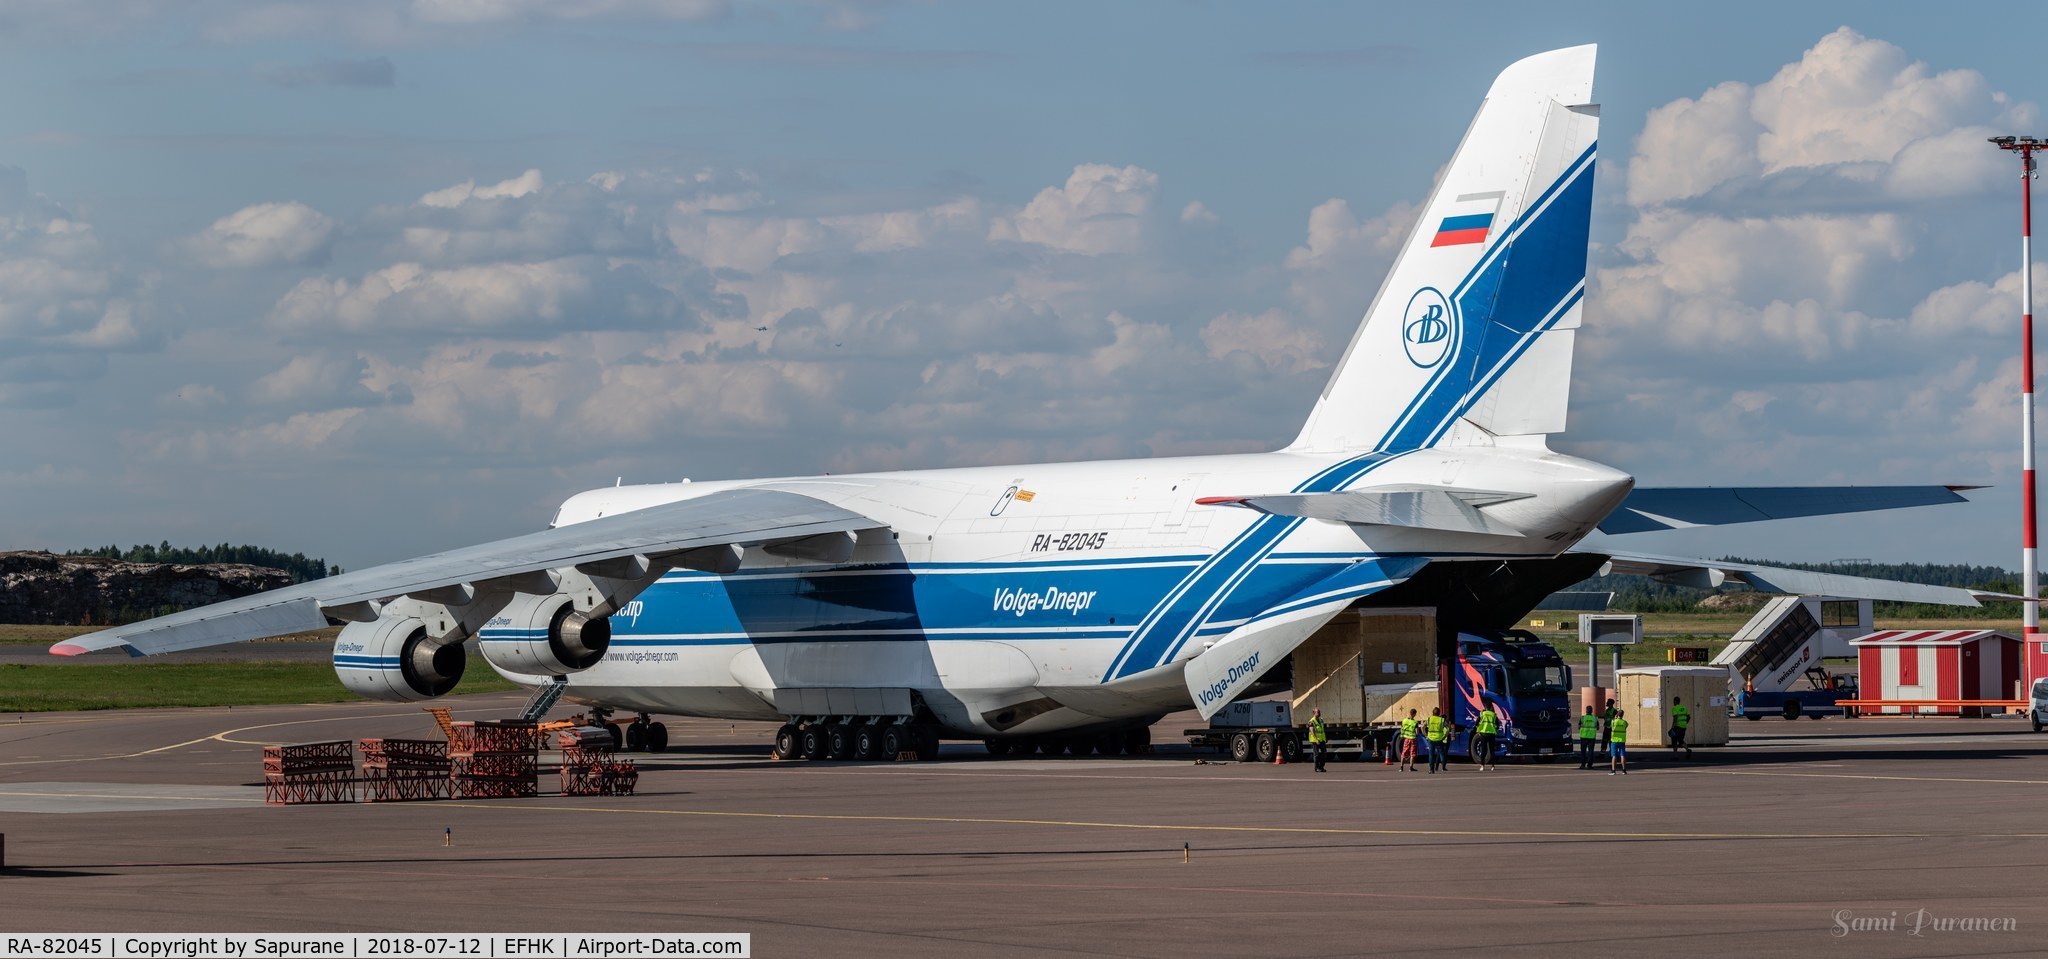 RA-82045, 1991 Antonov An-124-100 Ruslan C/N 9773052255113, Volga-Dnepr Airlines
Antonov An-124